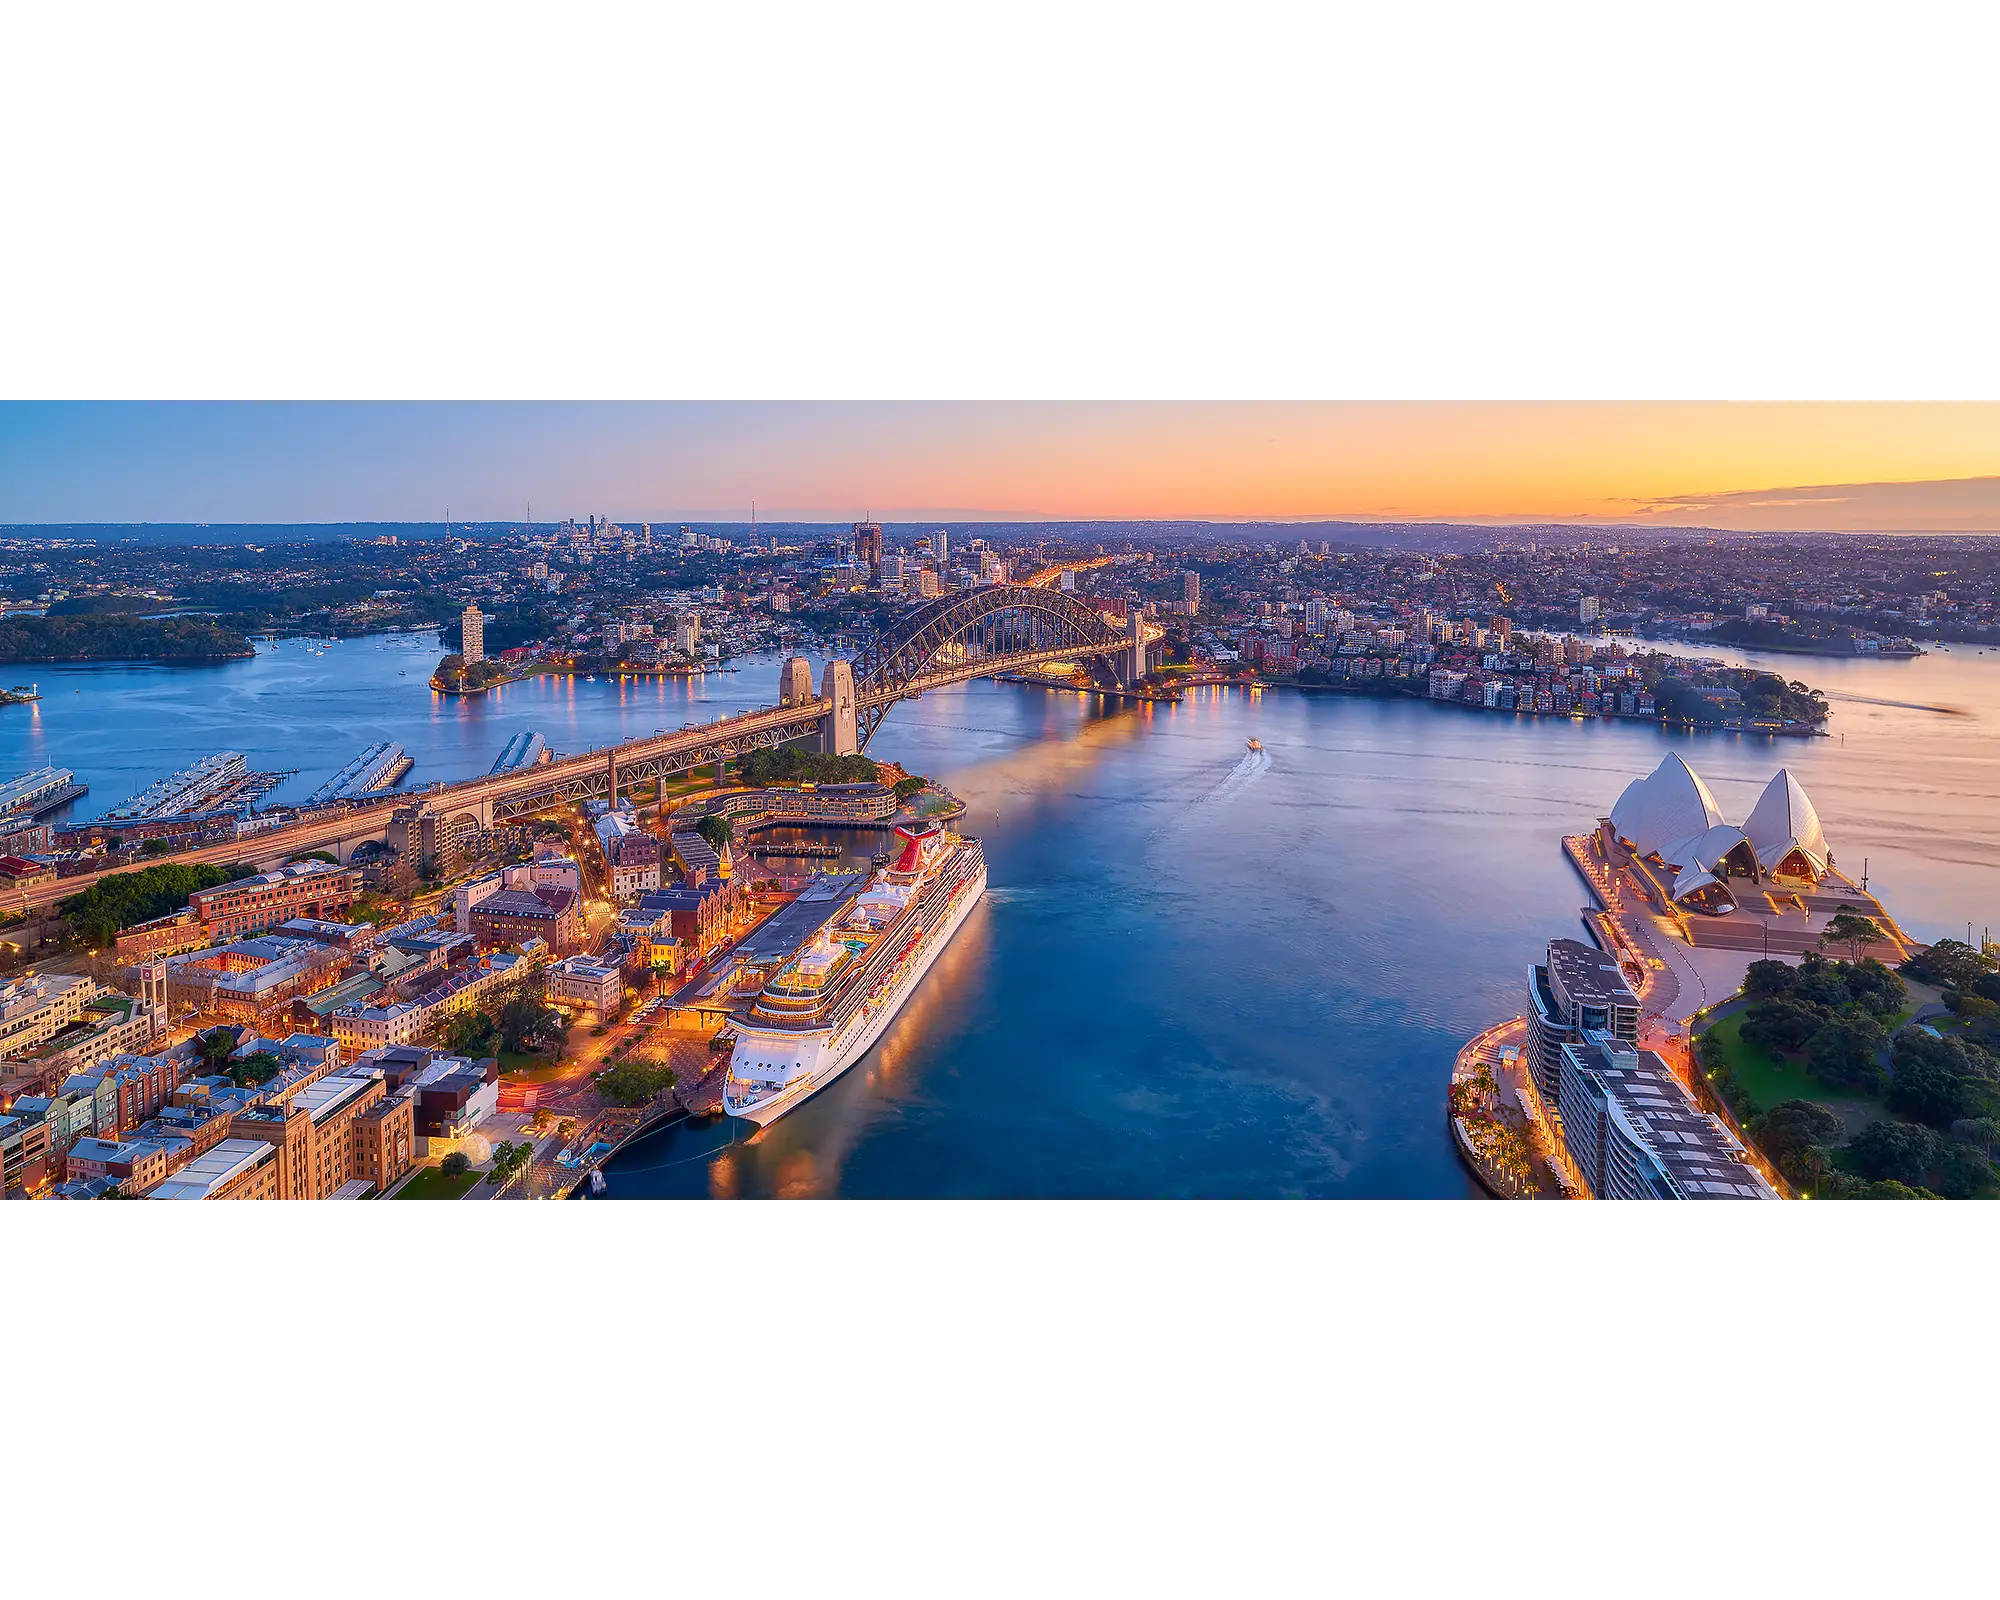 Sydney Awakes - Sydney Harbour at sunrise.